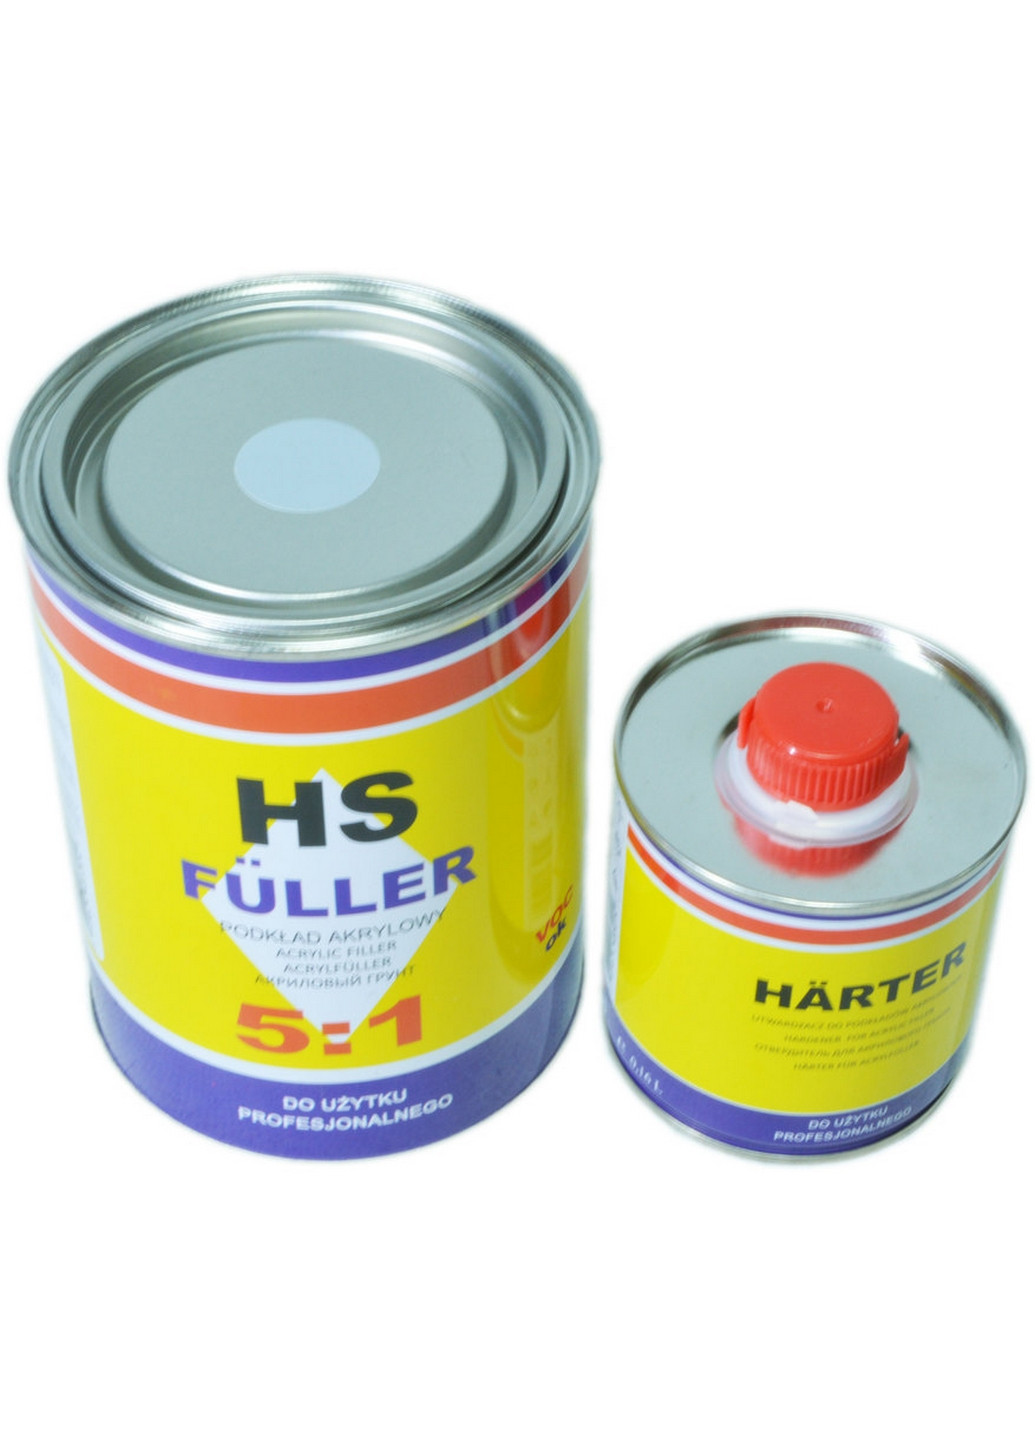 Акриловый грунт 5:1 0.8 л HS Fuller (отв. Harter – 160 мл) 10х22х10 см No Brand (263426209)